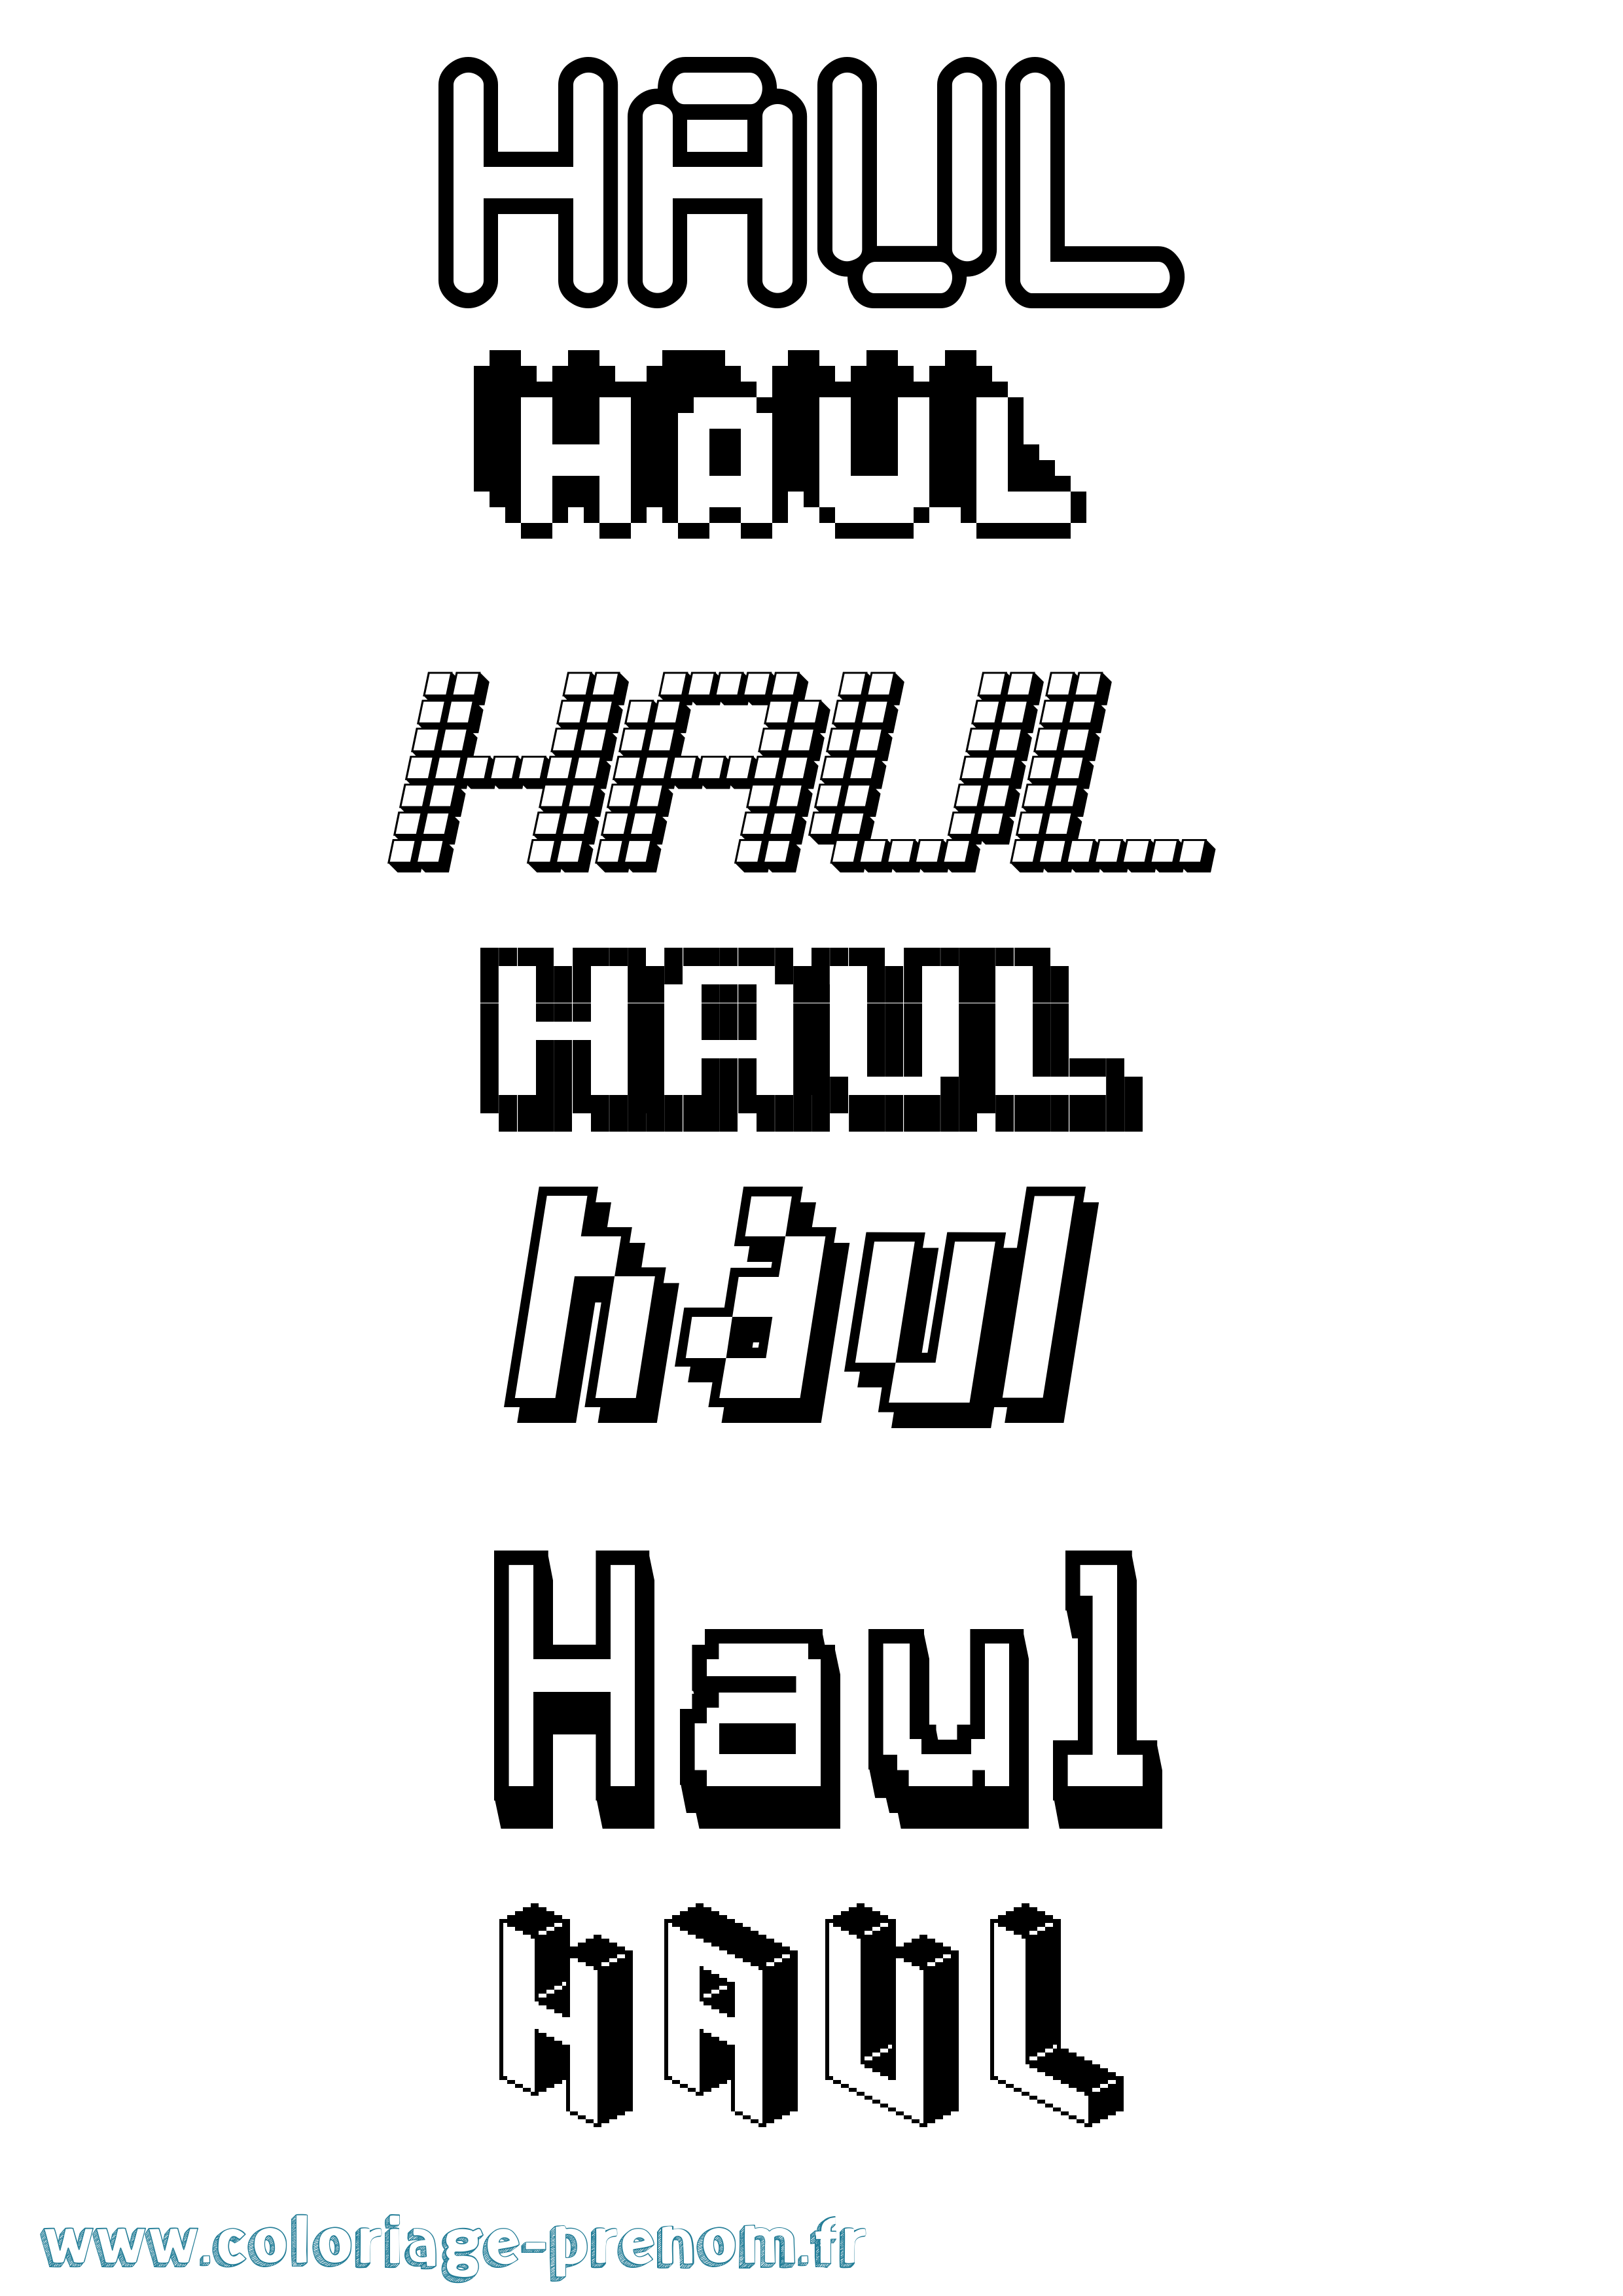 Coloriage prénom Haul Pixel